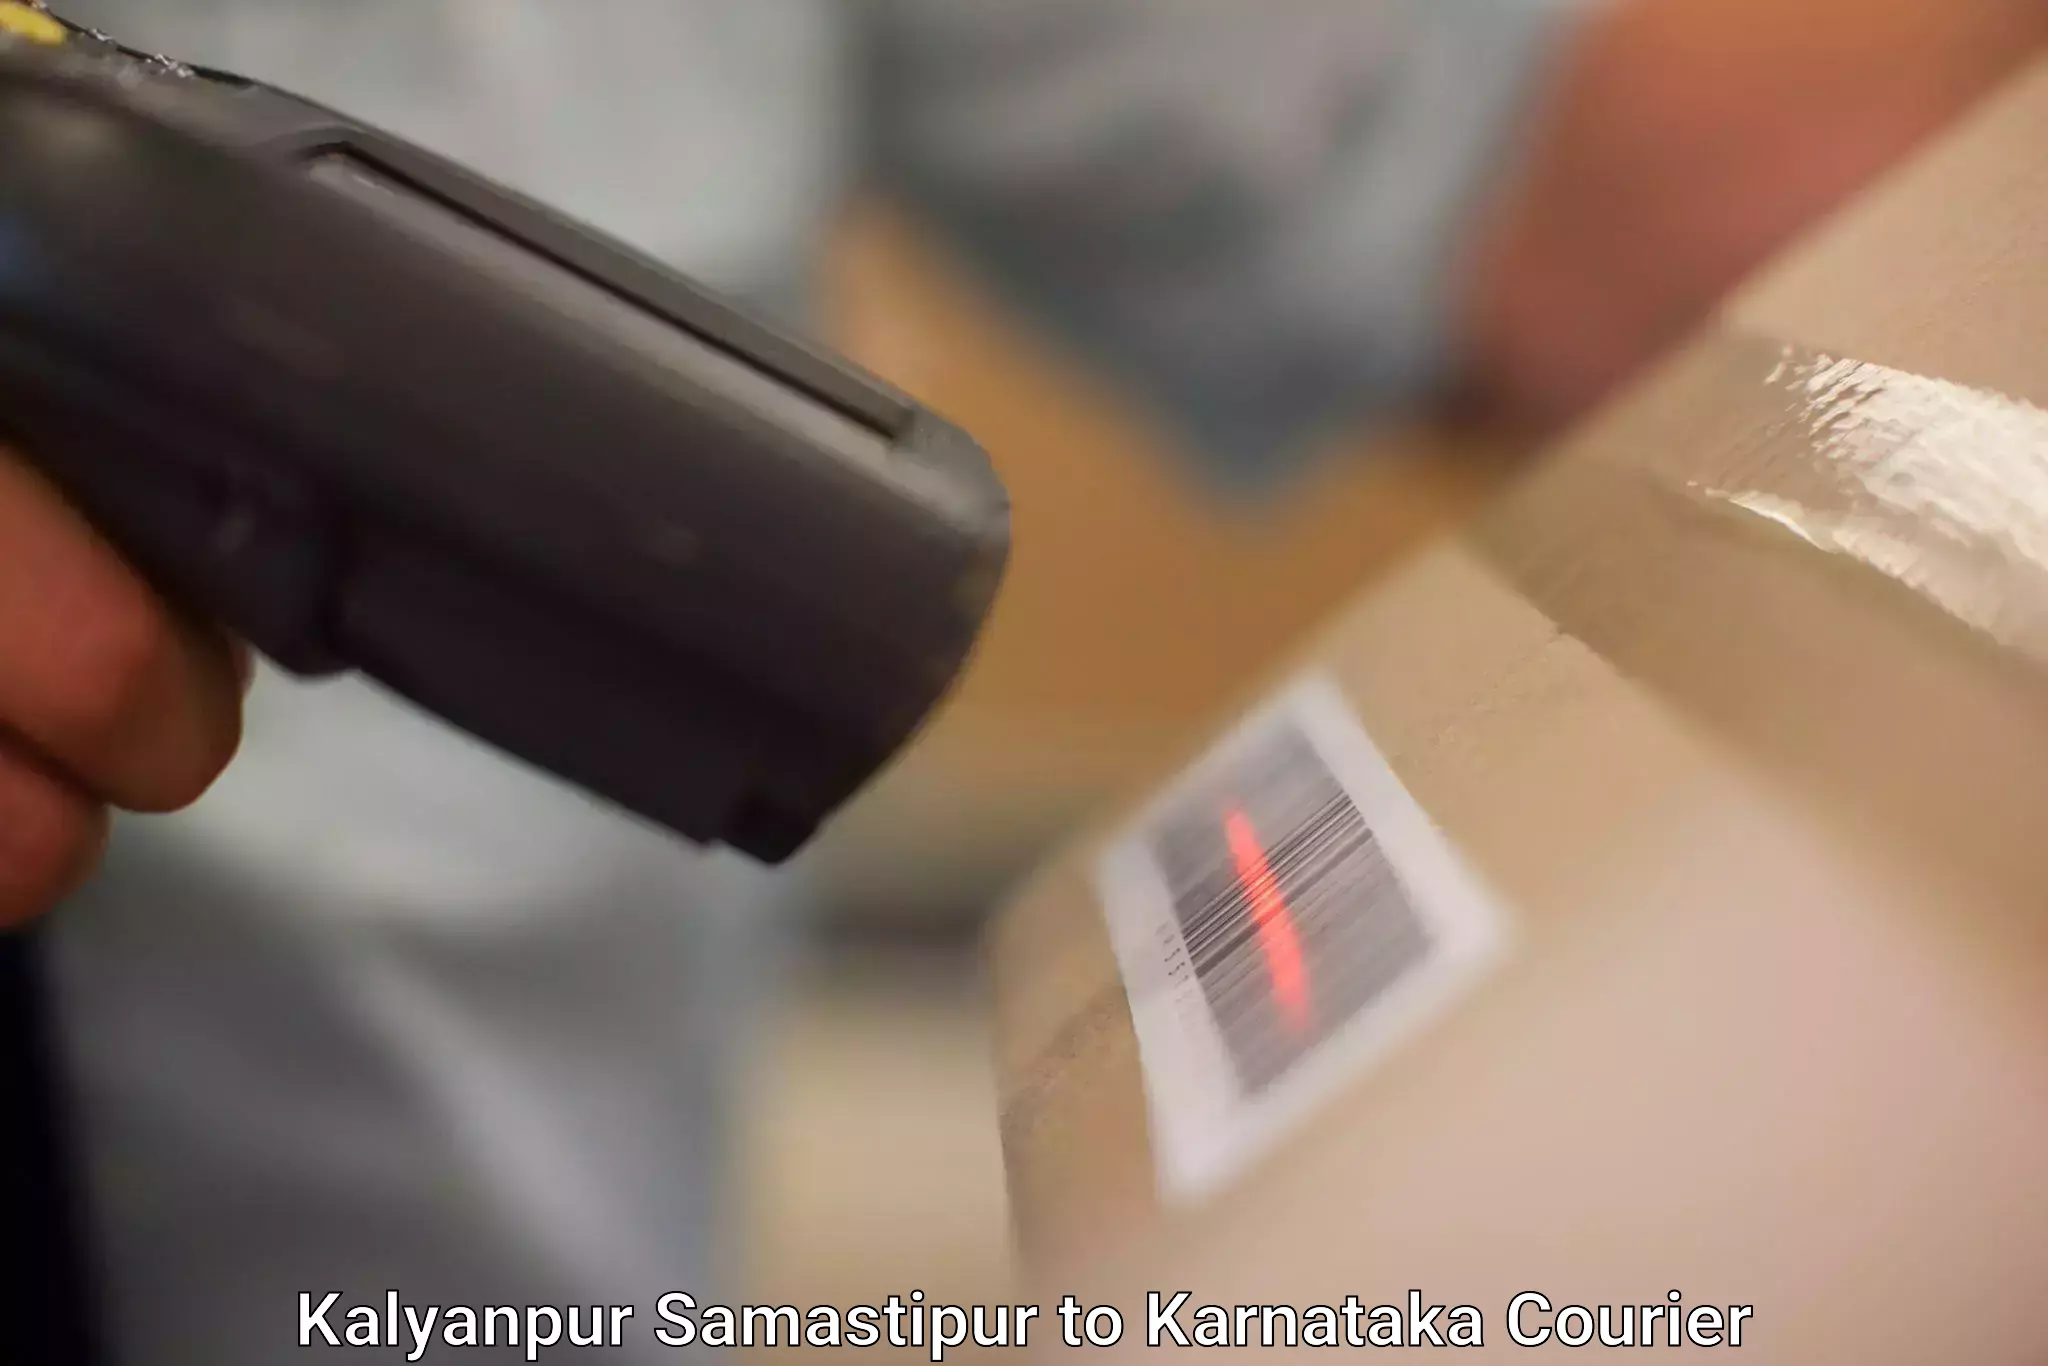 Next-day delivery options Kalyanpur Samastipur to Hoovina Hadagali